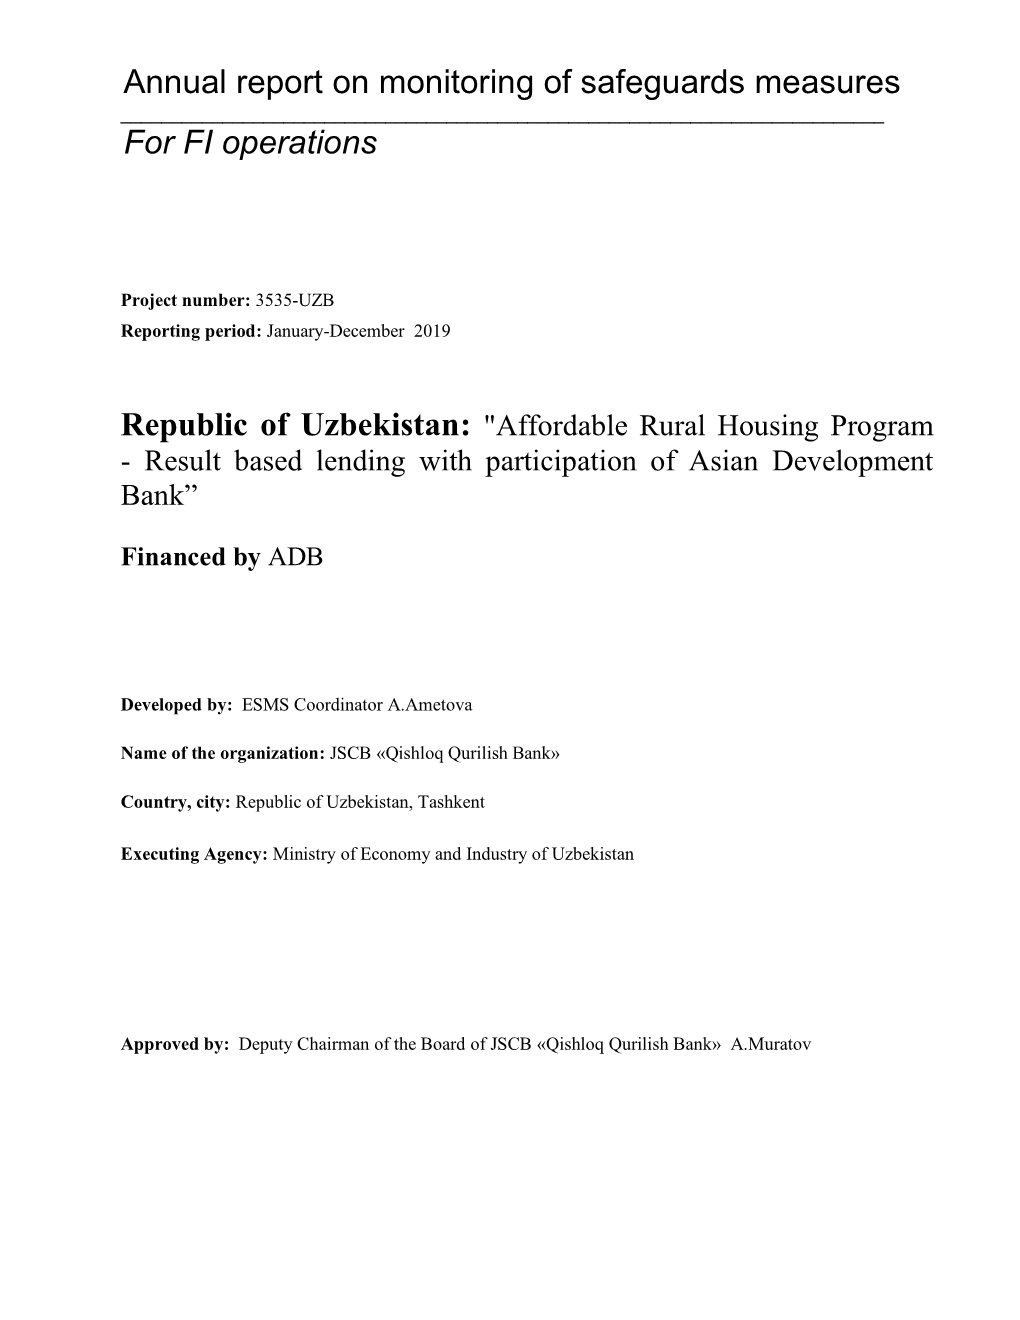 Affordable Rural Housing Program - Result Based Lending with Participation of Asian Development Bank”